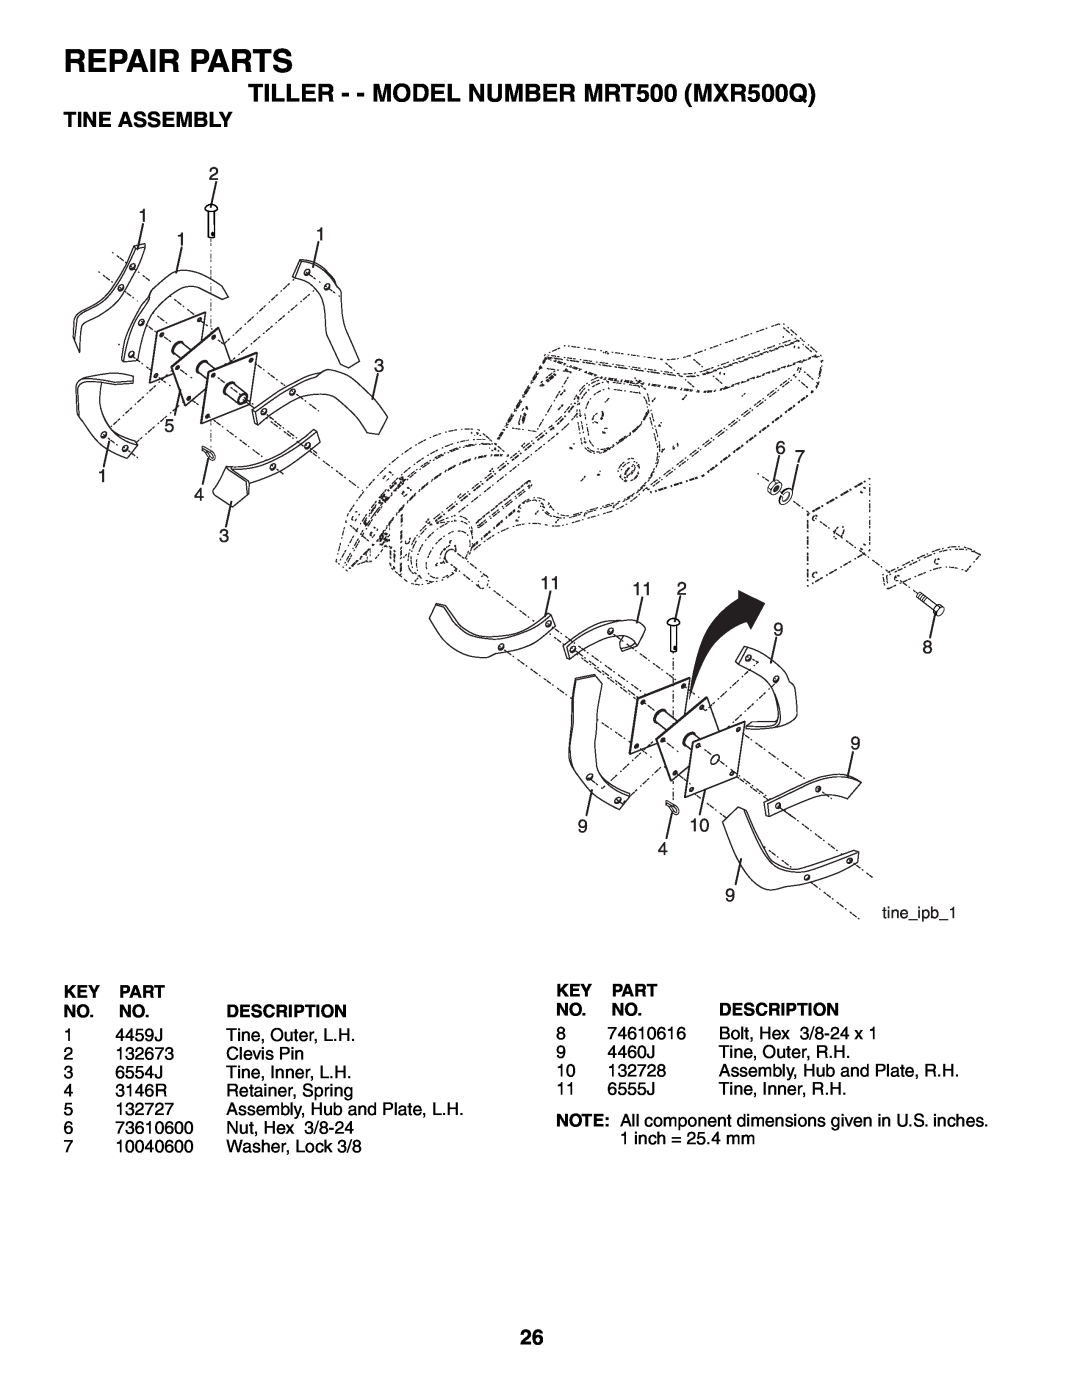 Poulan owner manual Tine Assembly, Repair Parts, TILLER - - MODEL NUMBER MRT500 MXR500Q, 9 10, Description 